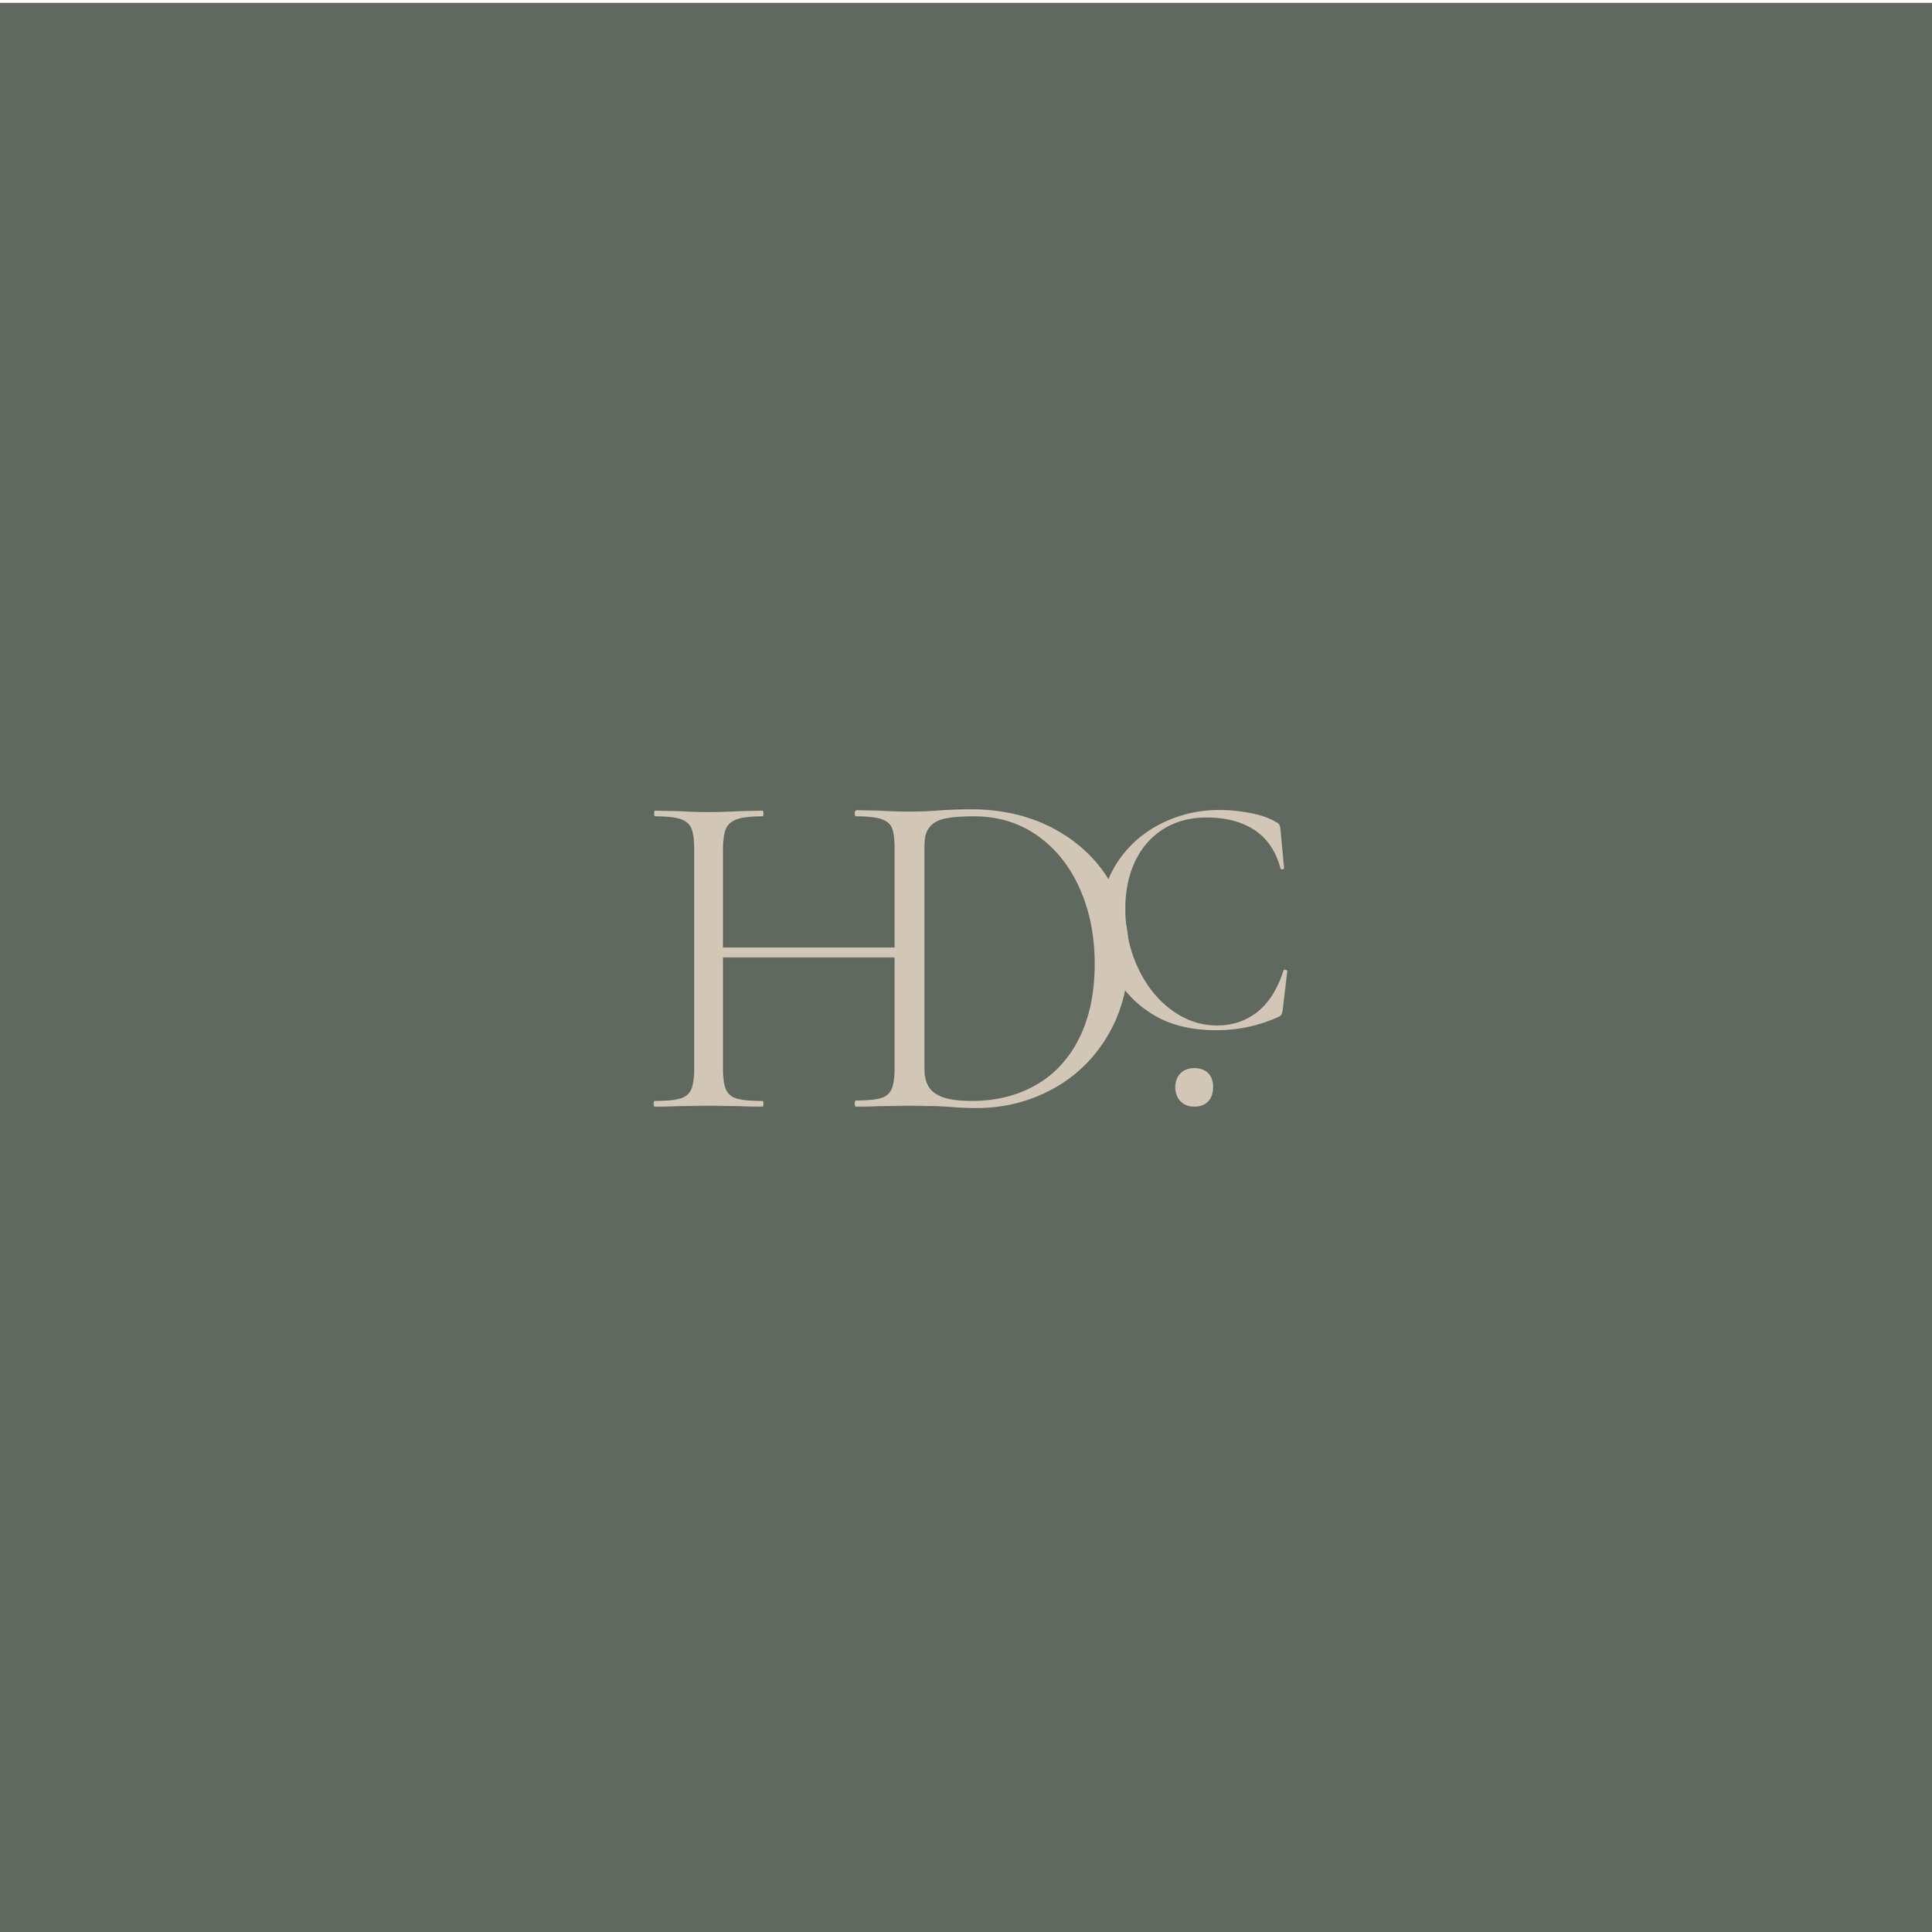 HDC | Submark.jpg